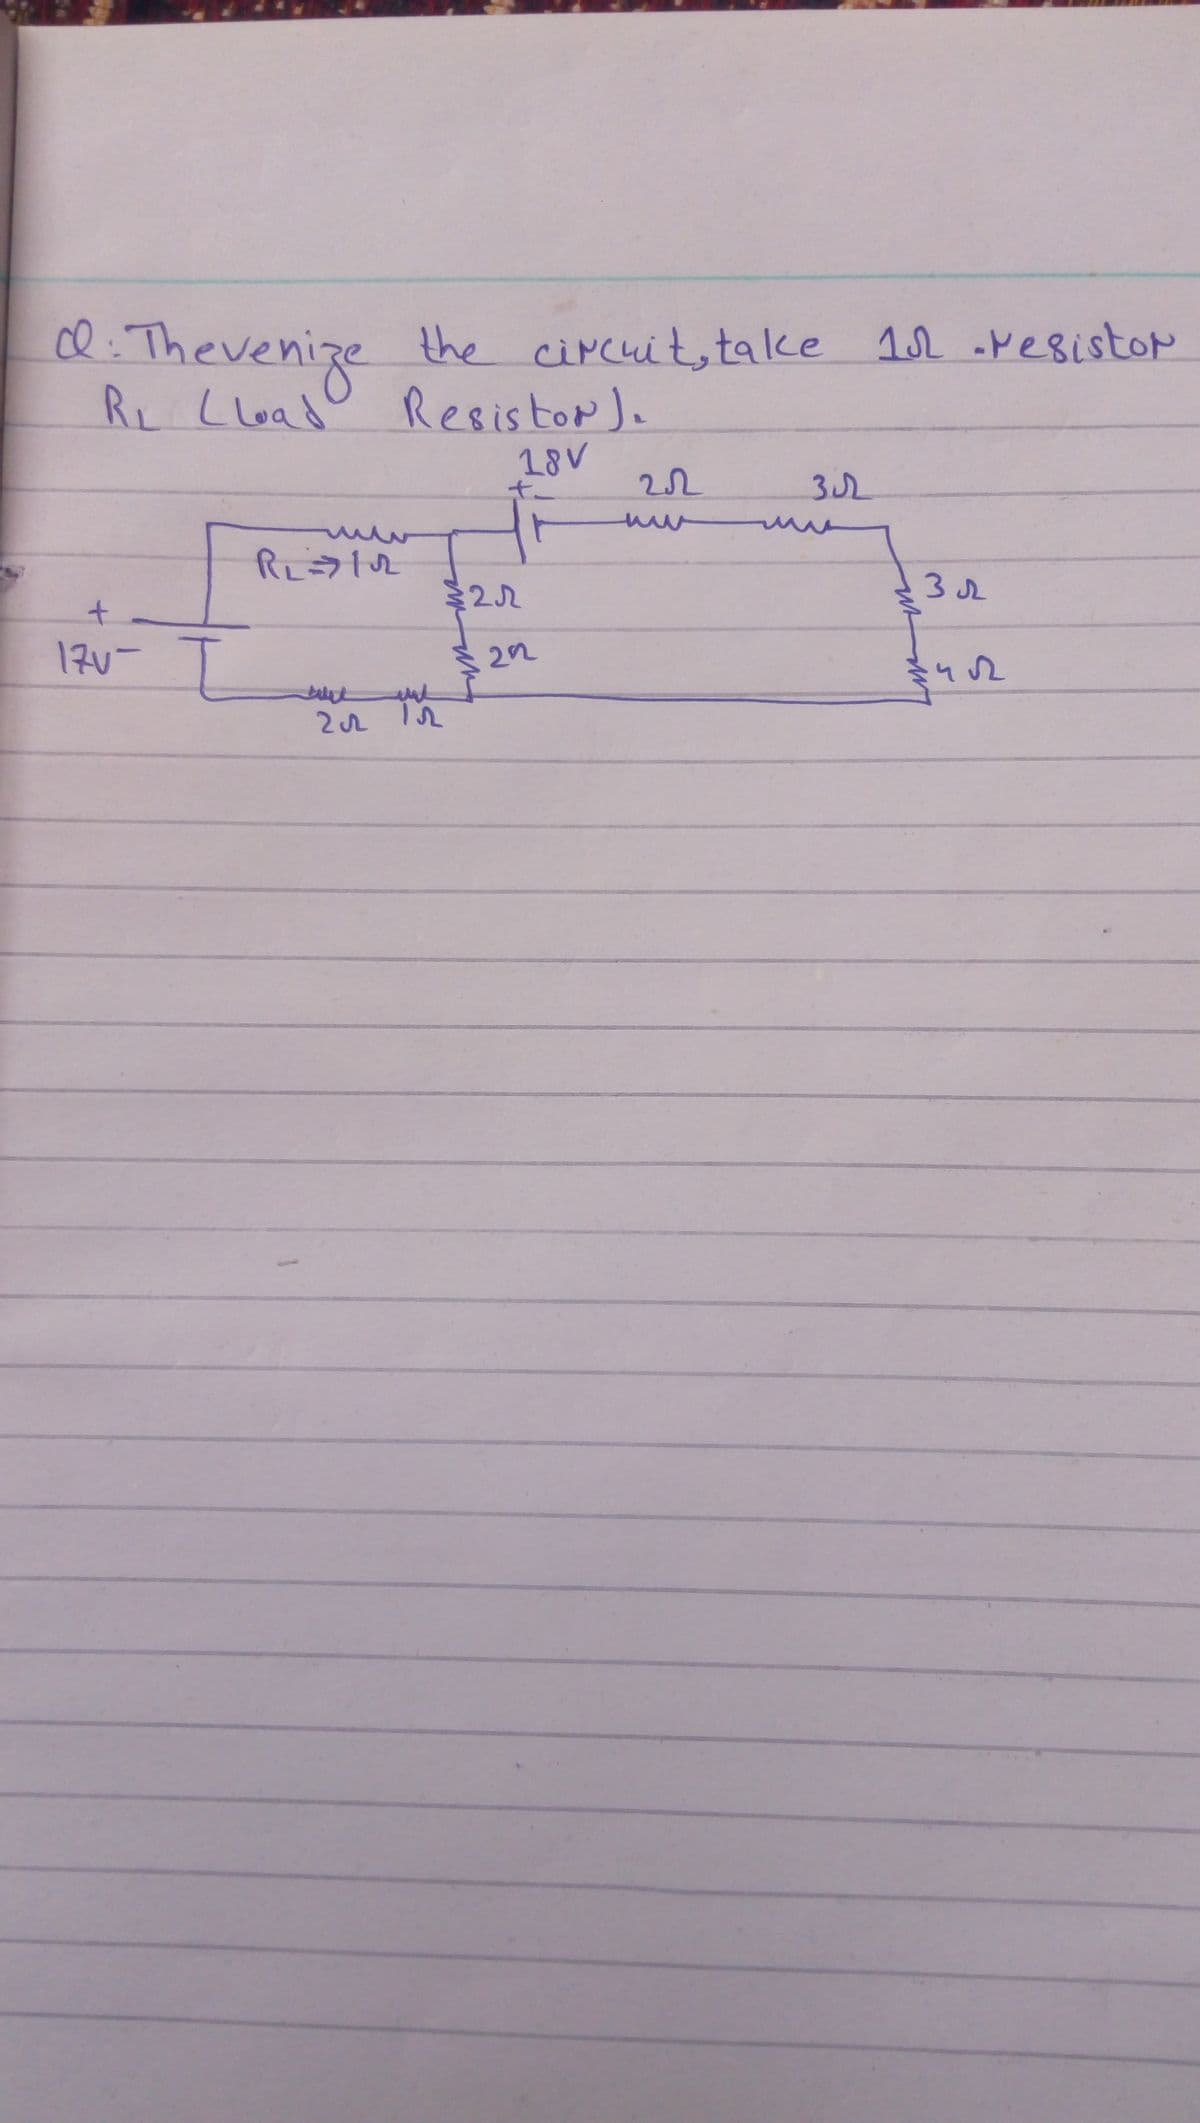 e: Thevenize the 12 Mesistor
Q.Thevenize
circuit,take
RL L load
Resistor).
18V
22
32
ミ2n
32
17U- T
22
